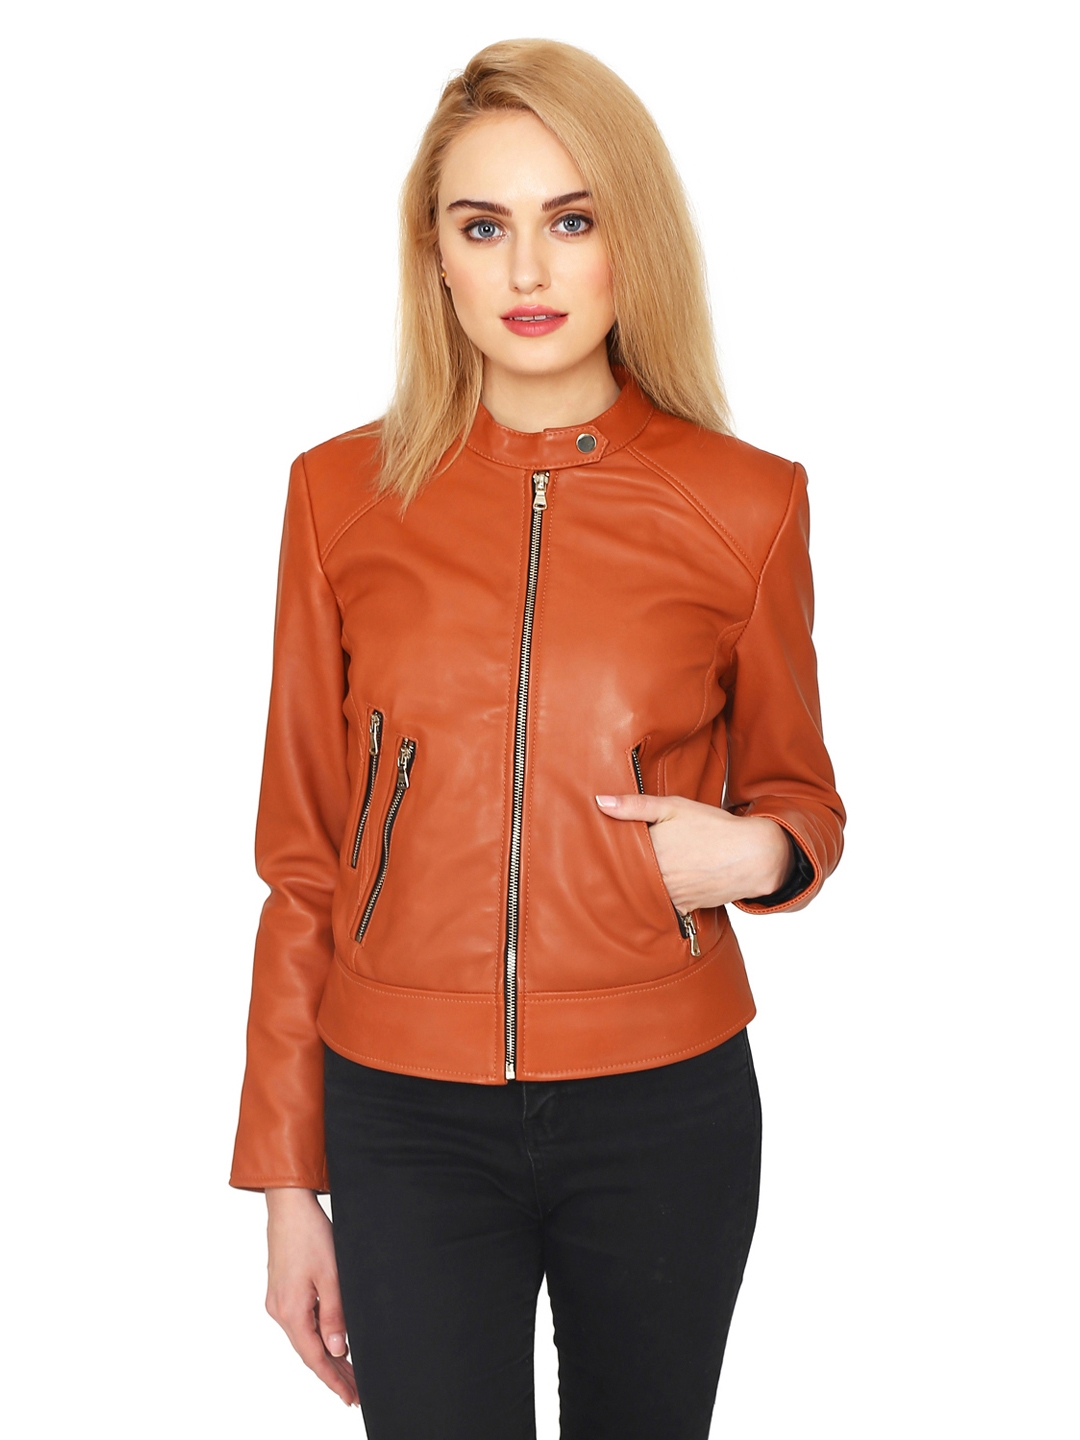 Justanned | Justanned Women Orange Genuine Real Leather Jacket